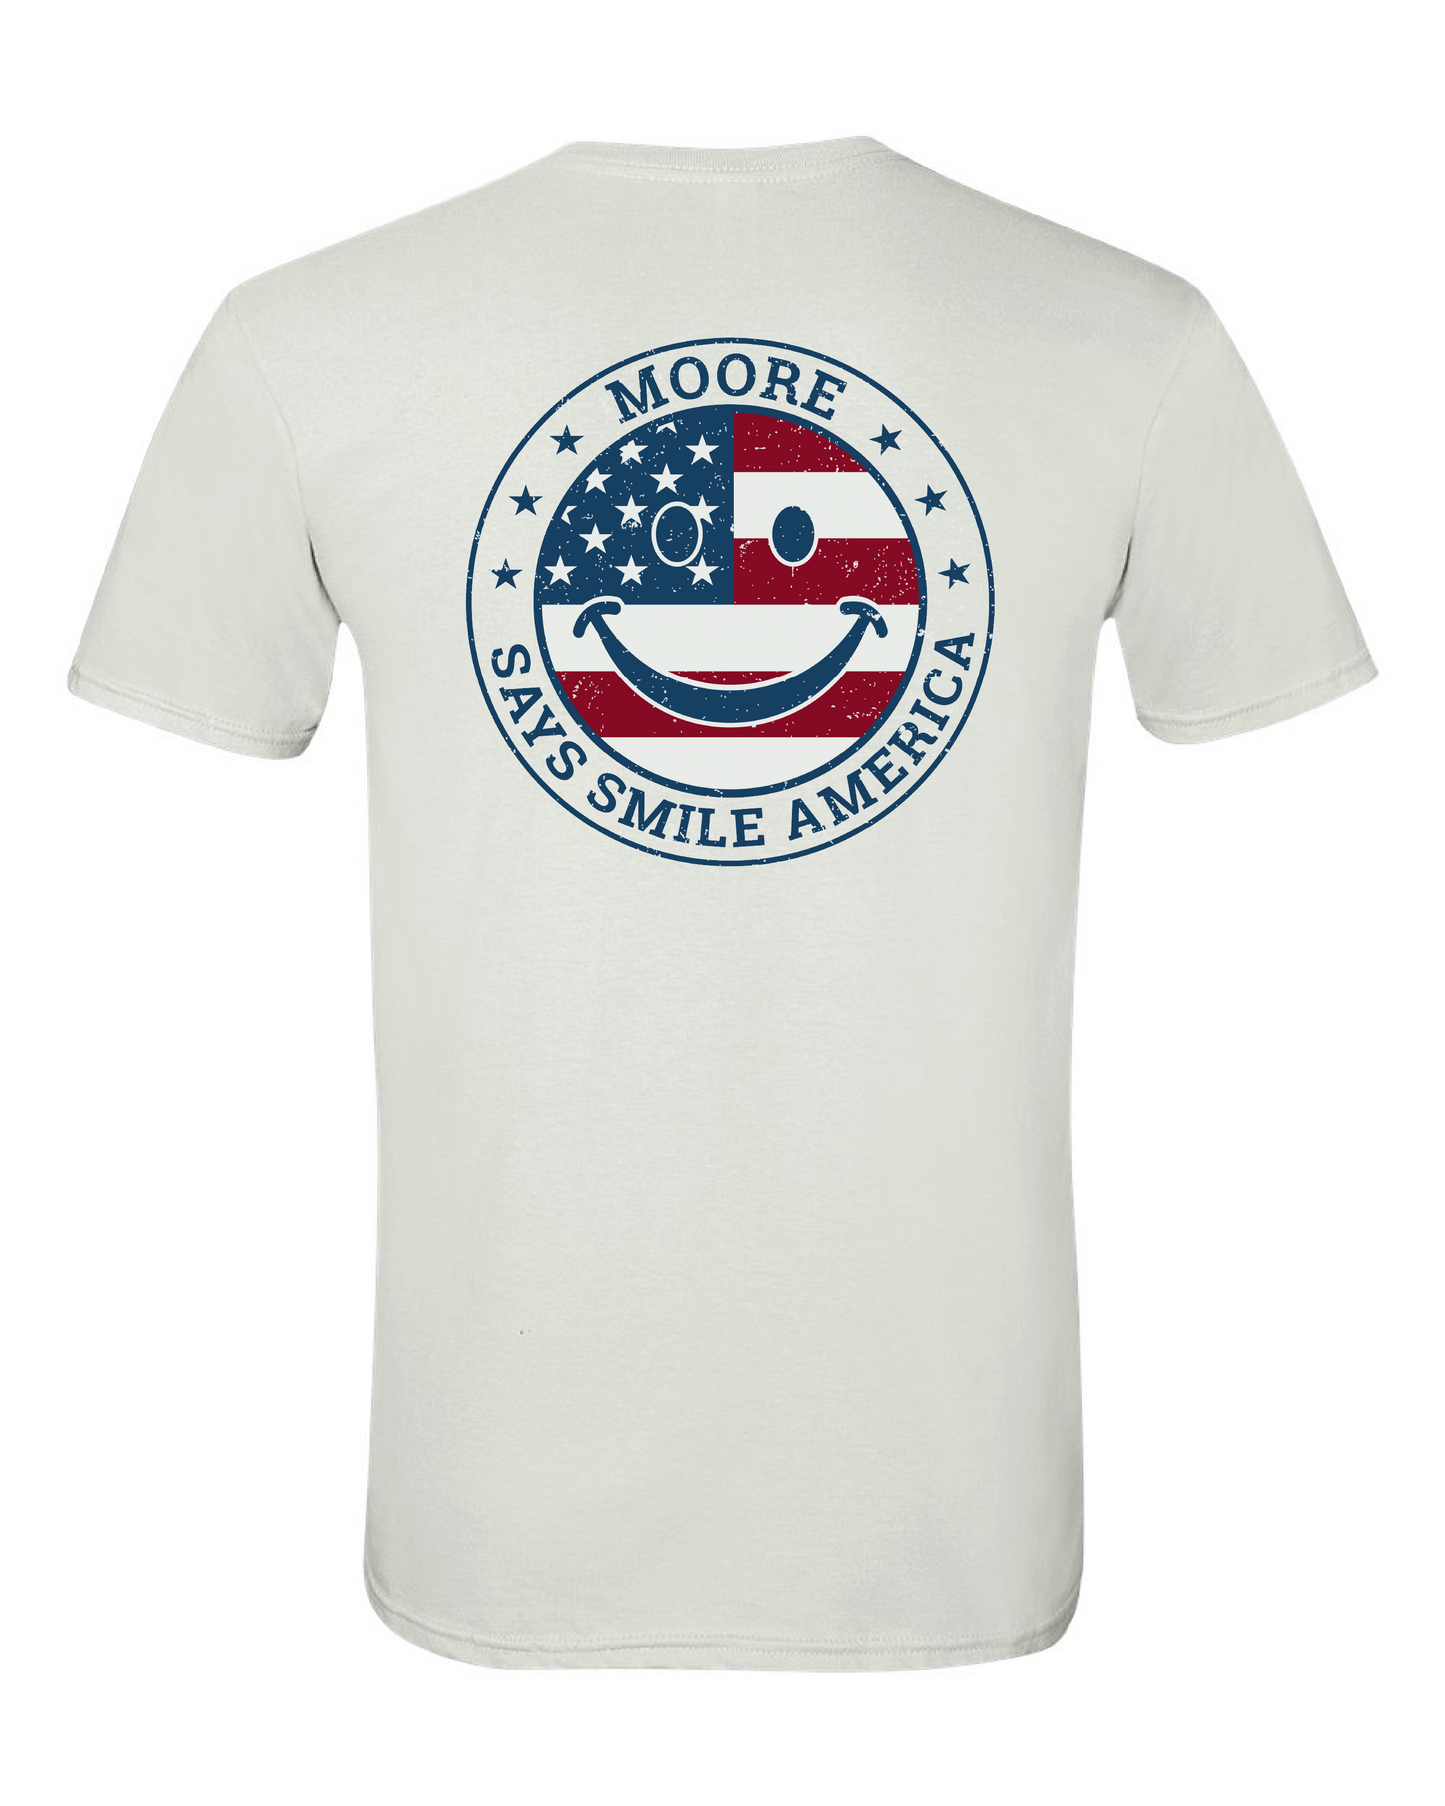 Moore Says Smile America - Tshirt